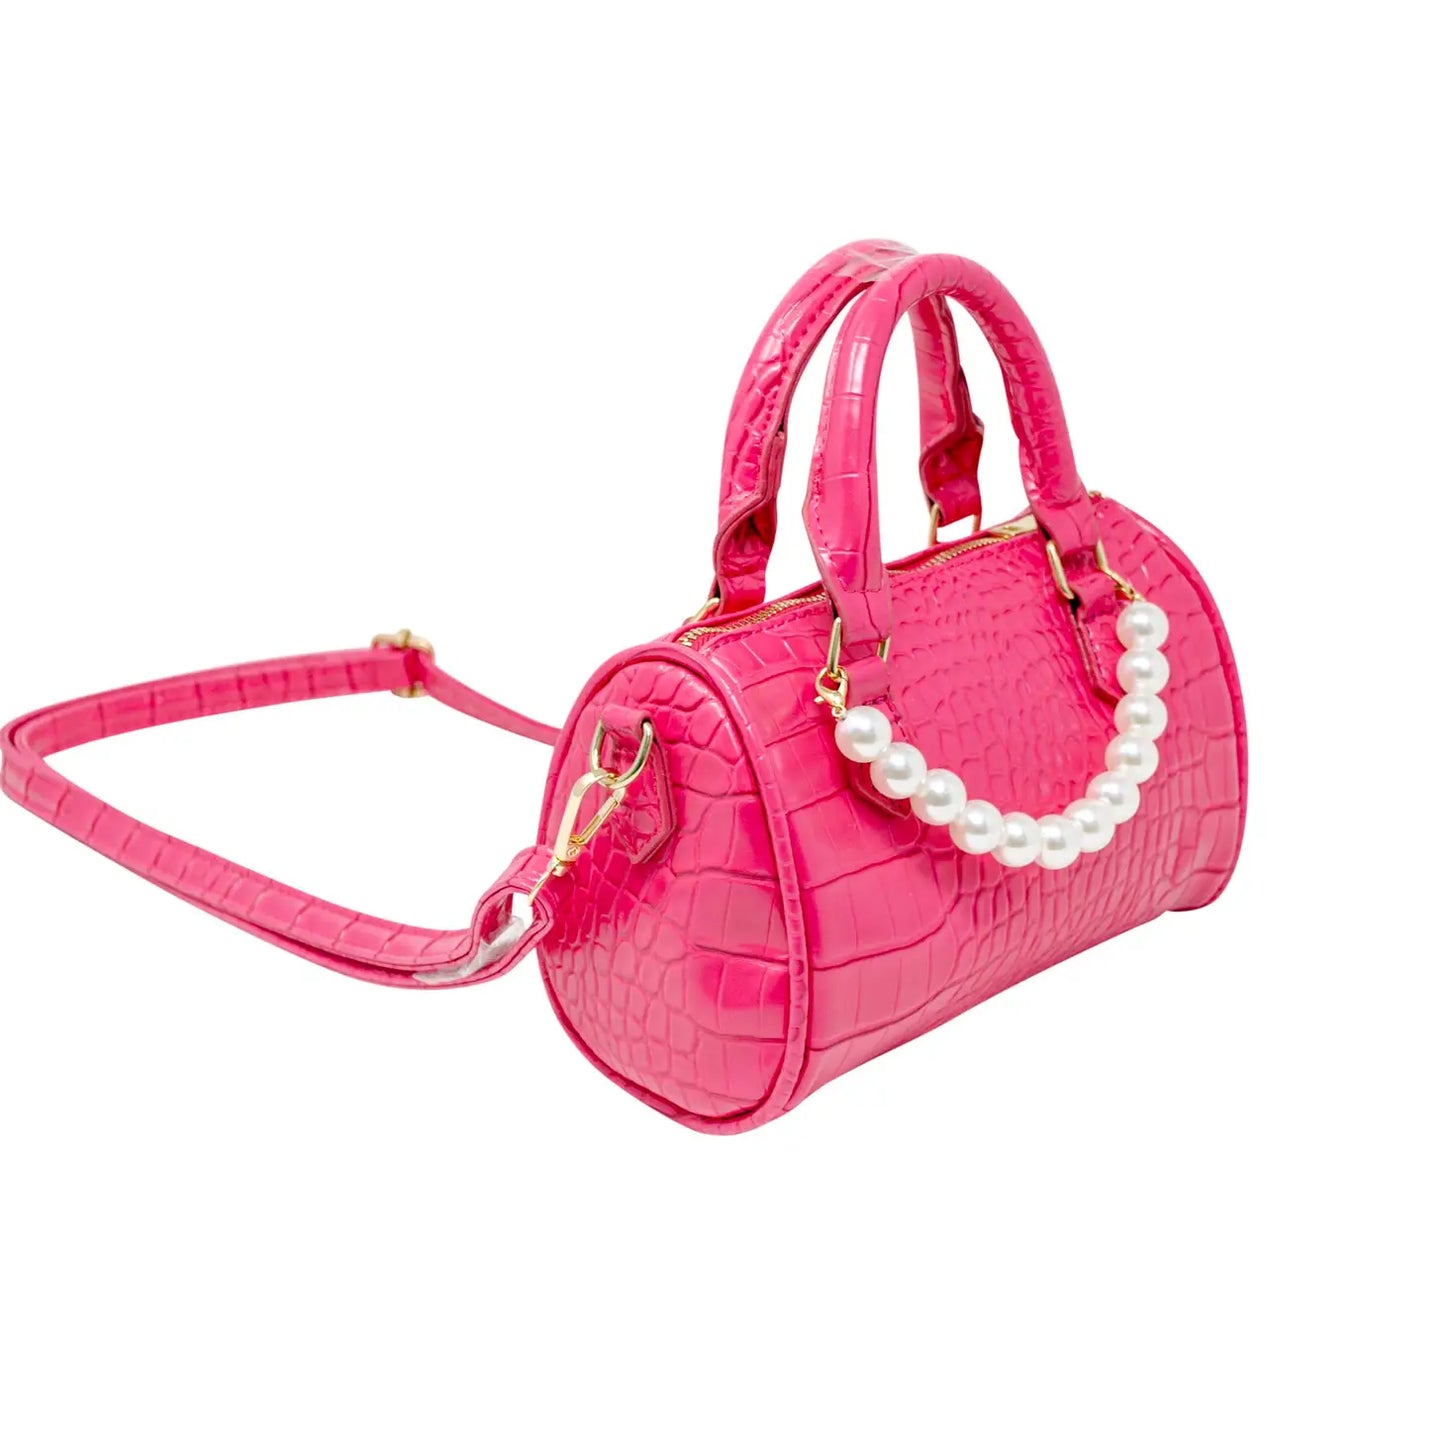 Crocodile Pearl Duffle Handbag - Hot Pink